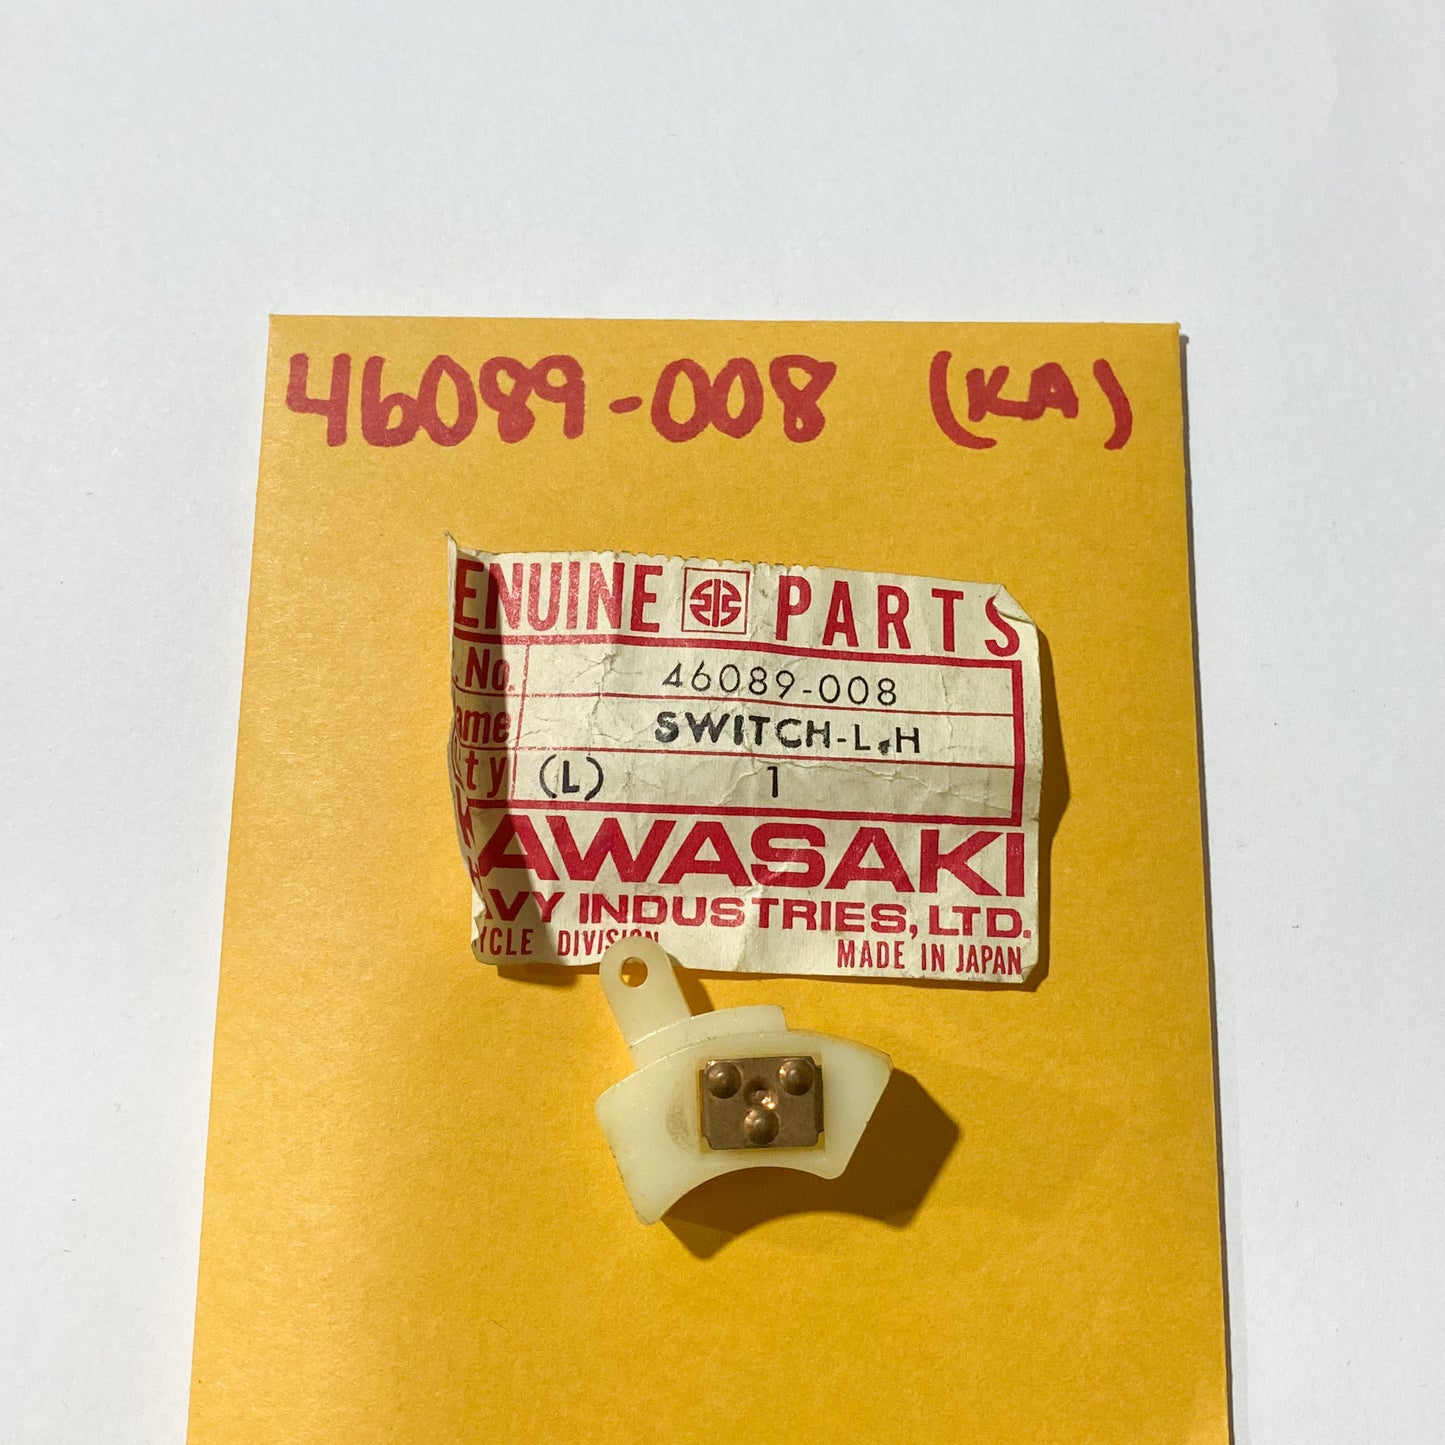 KAWASAKI SWITCH-L.H. 46089-008